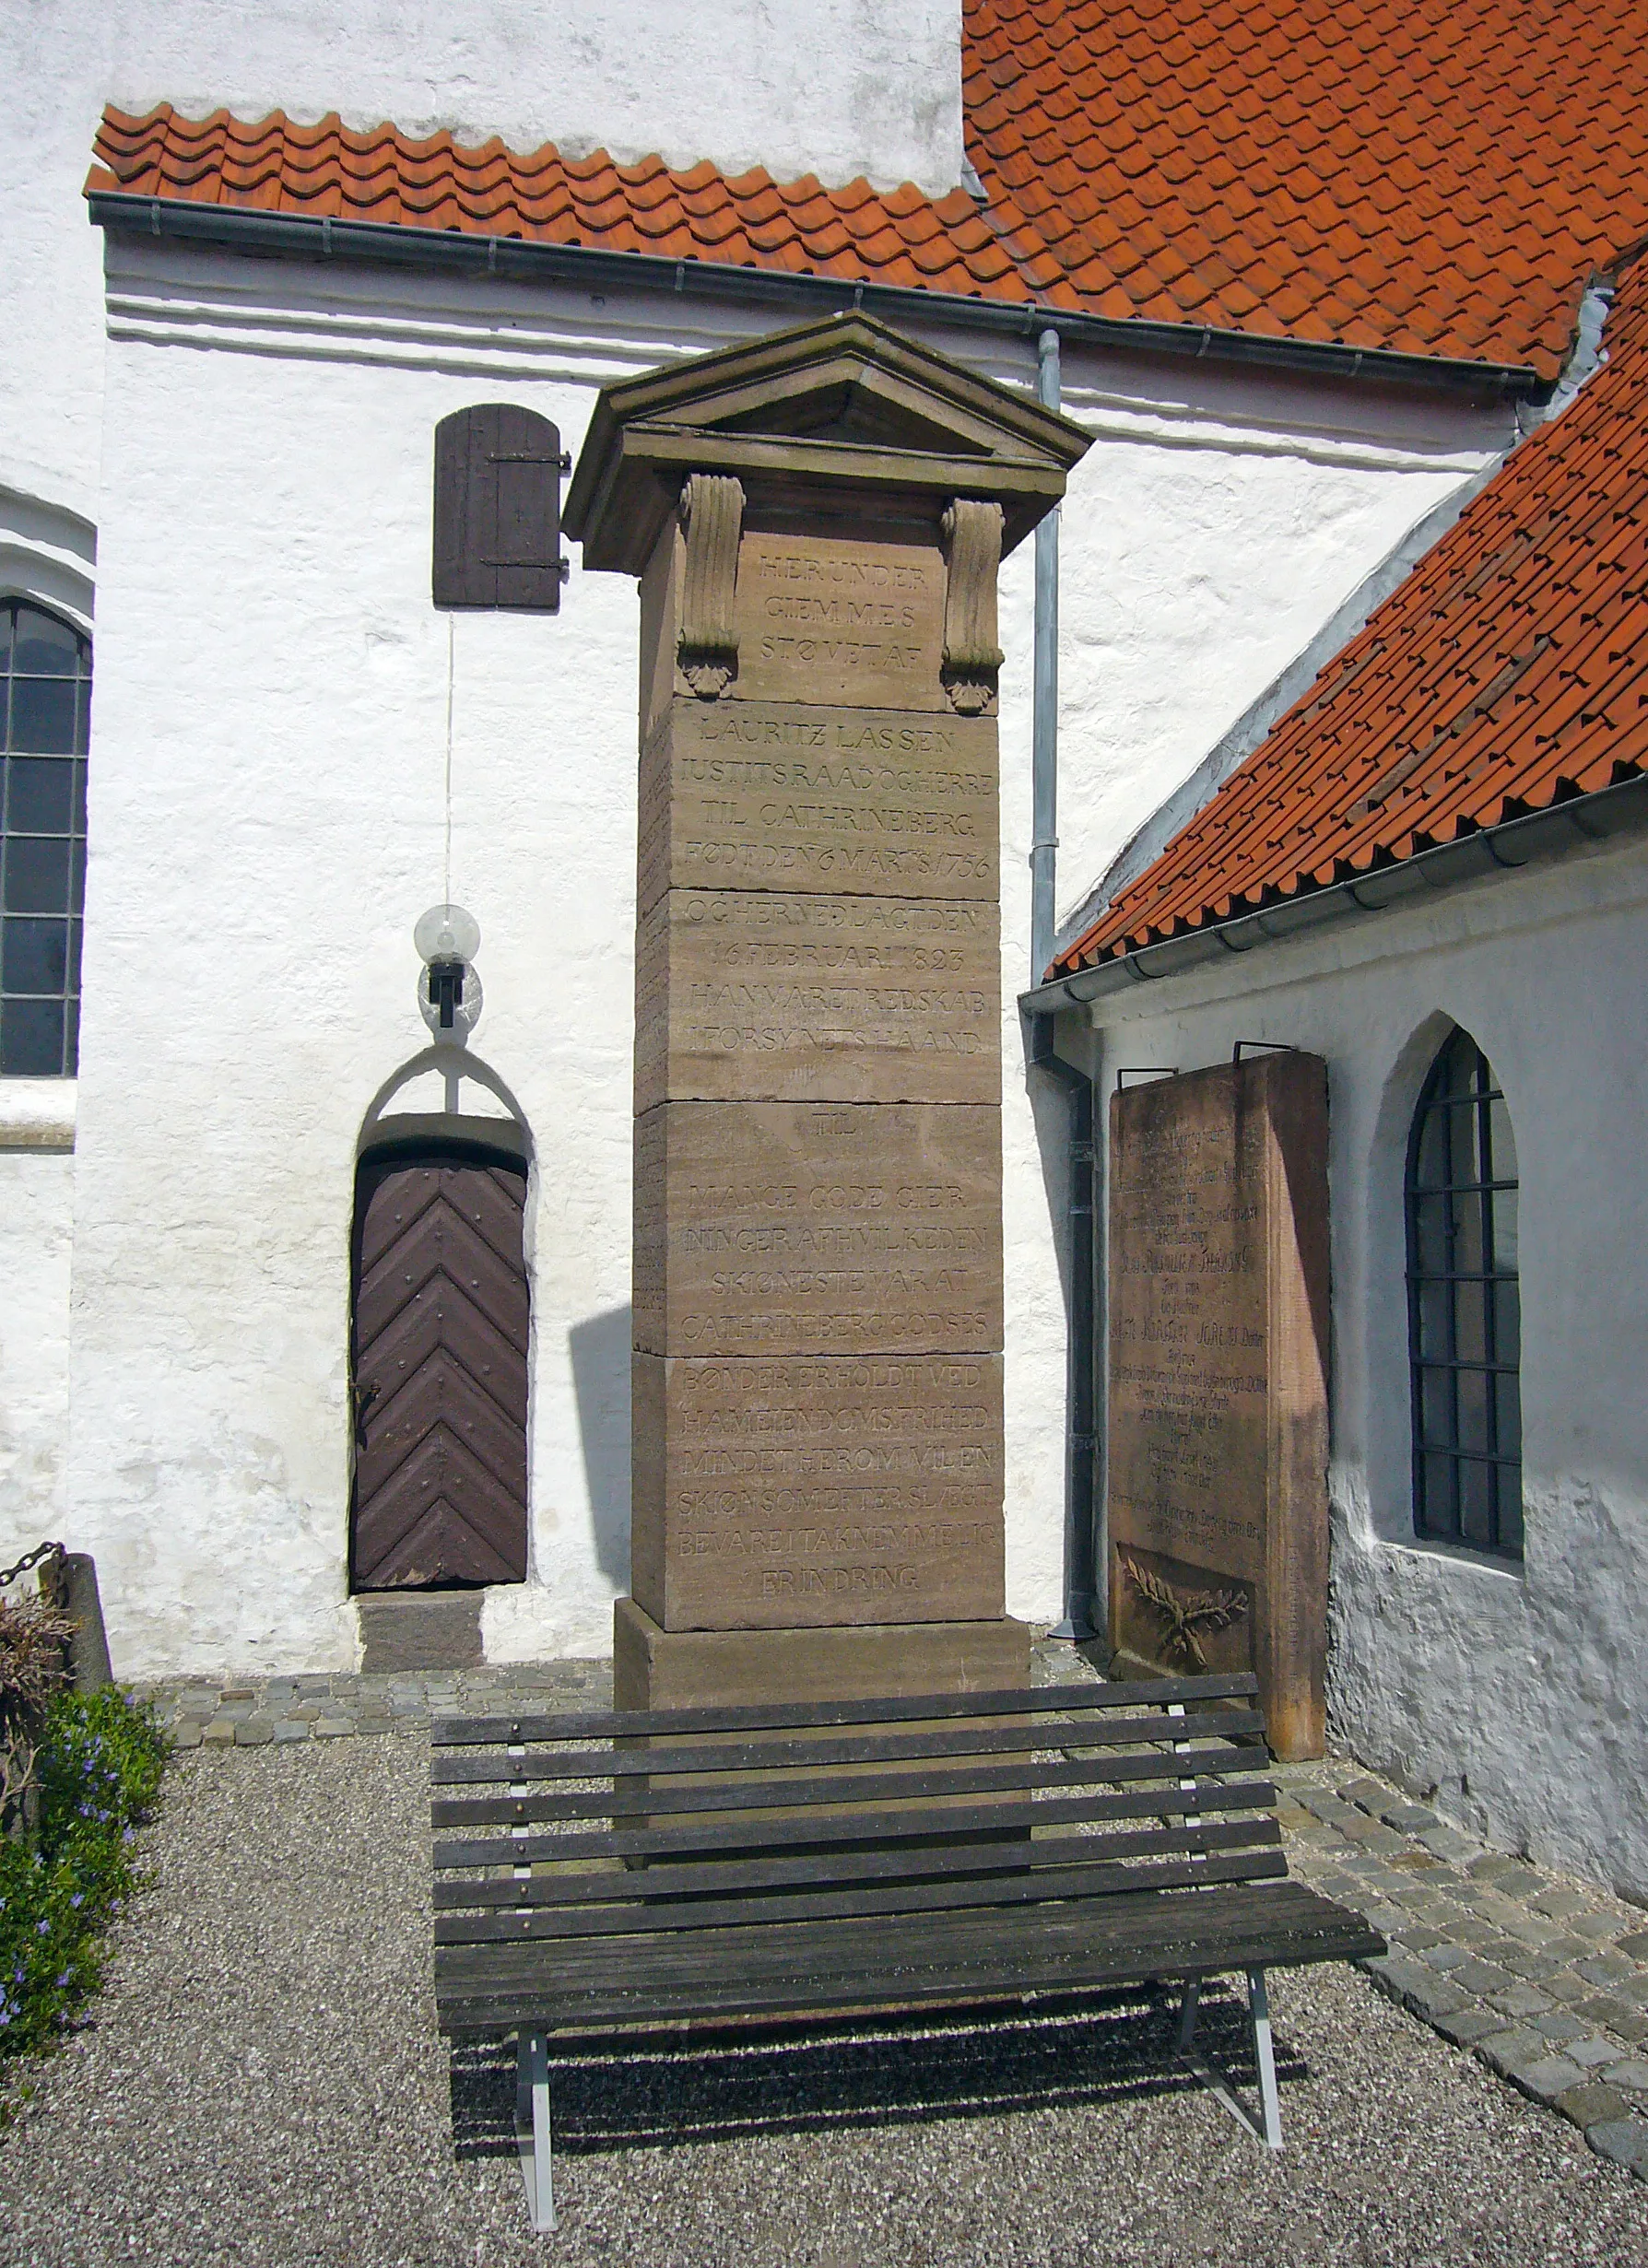 Photo showing: Sengeløse Kirke, Høje-Taastrup, Denmark.

Memorial